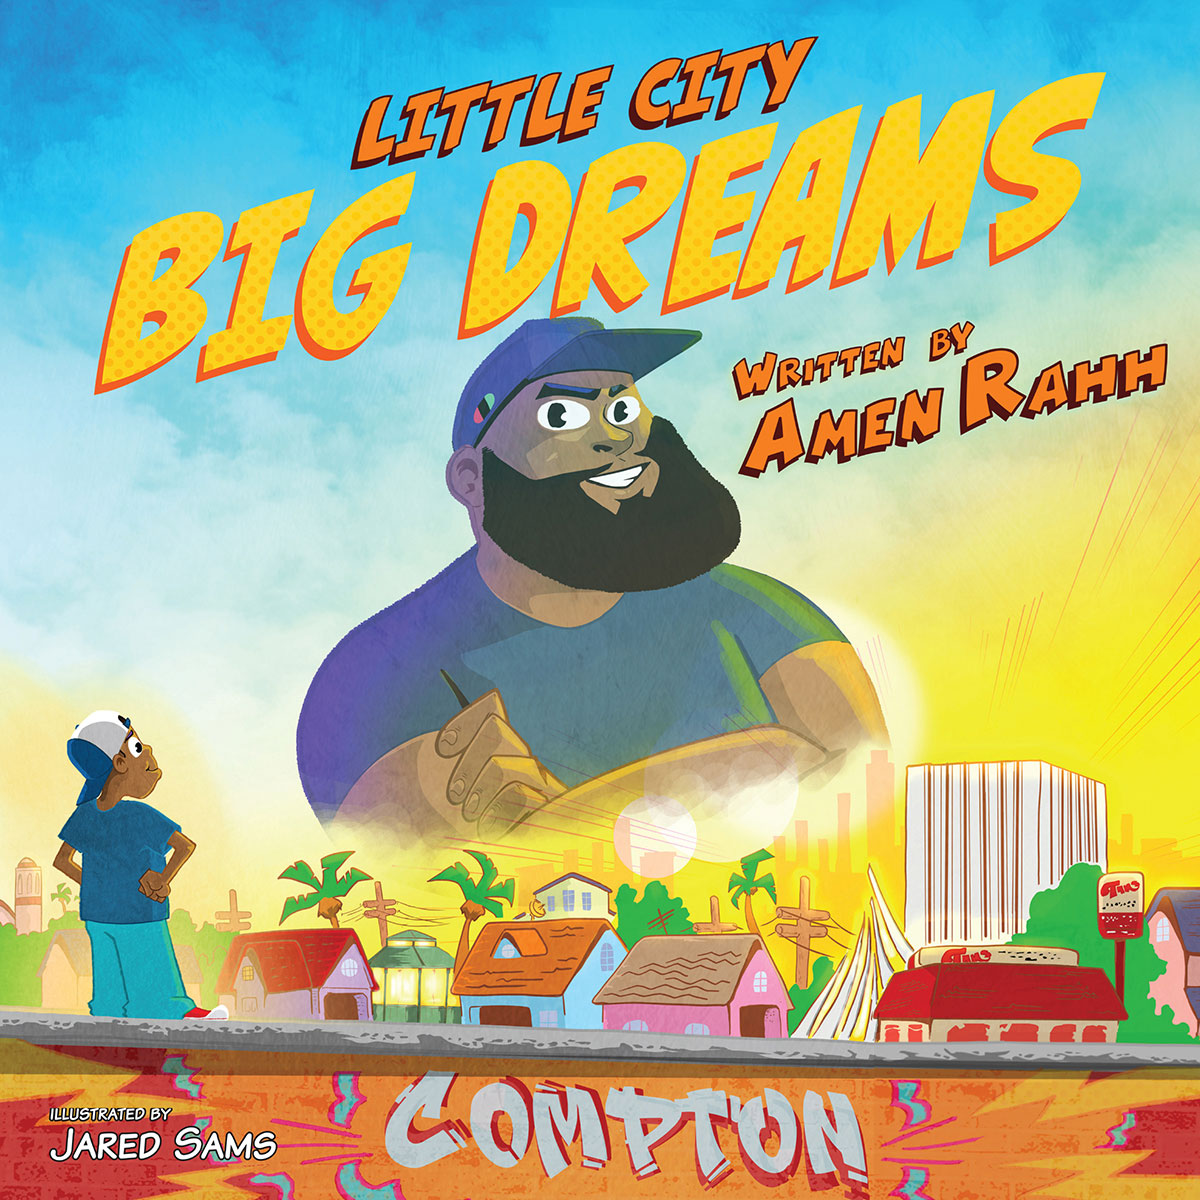 Conscious Corner - Author Principal Rahh "Little City Big Dreams" Book